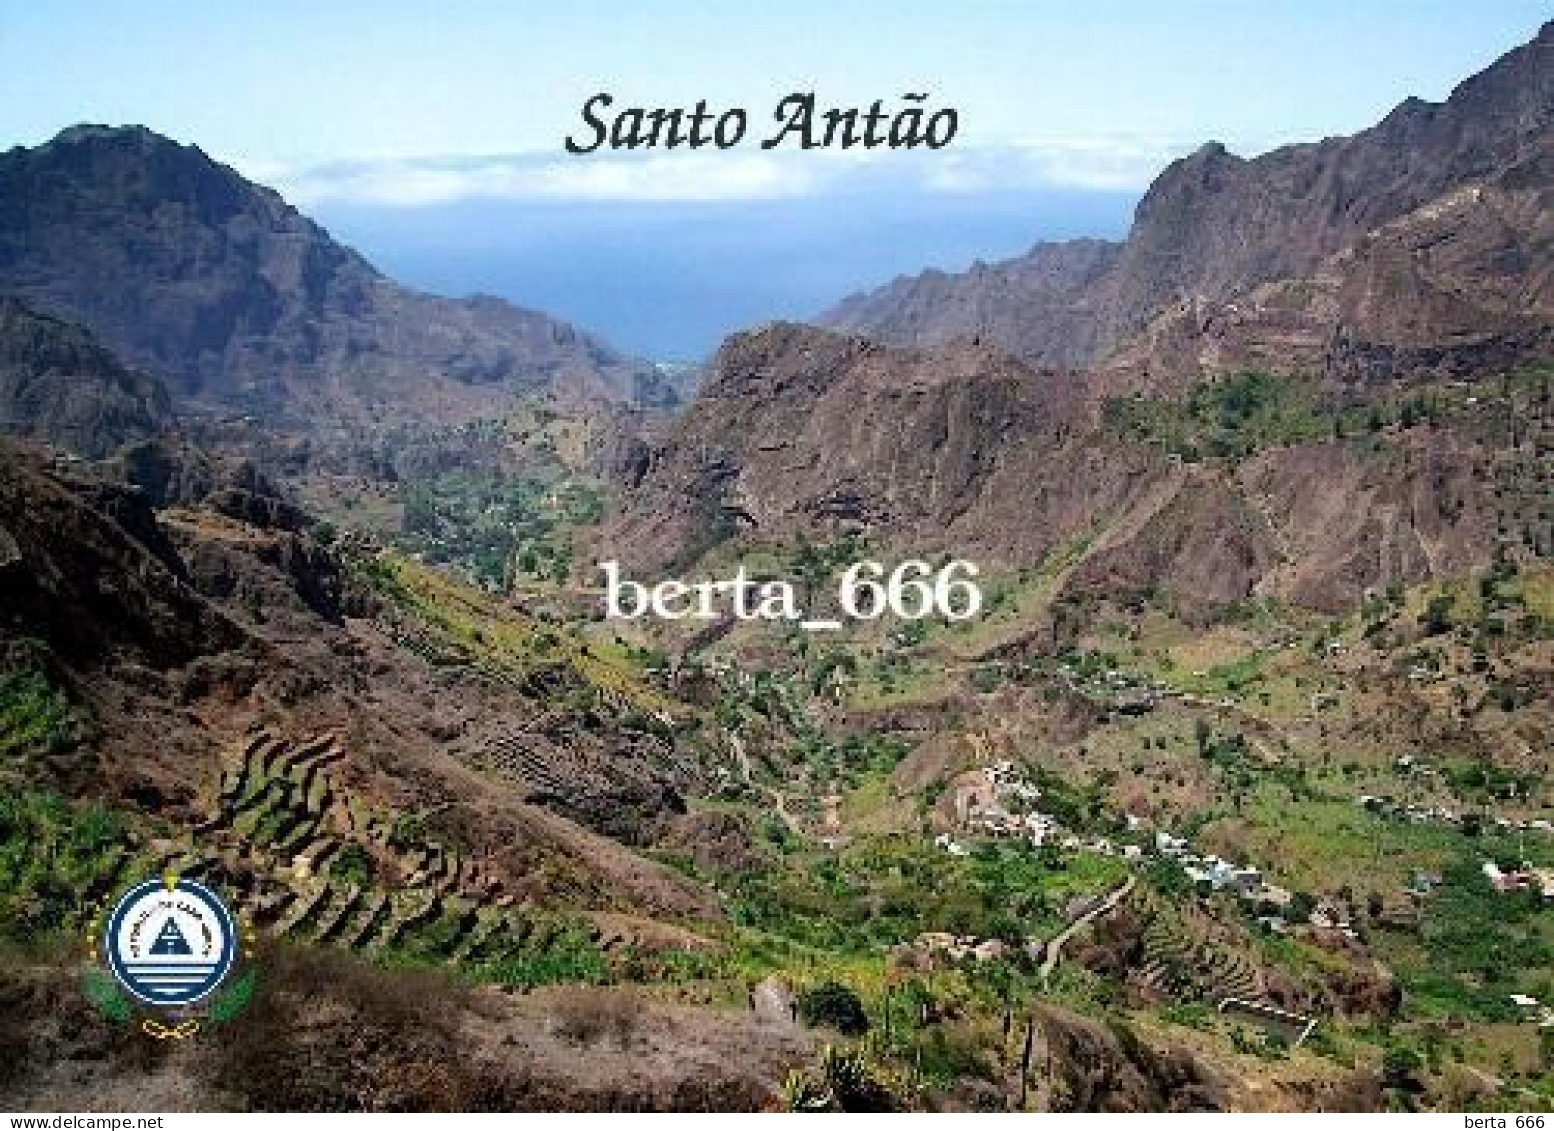 Cape Verde Santo Antao Island New Postcard - Cap Verde